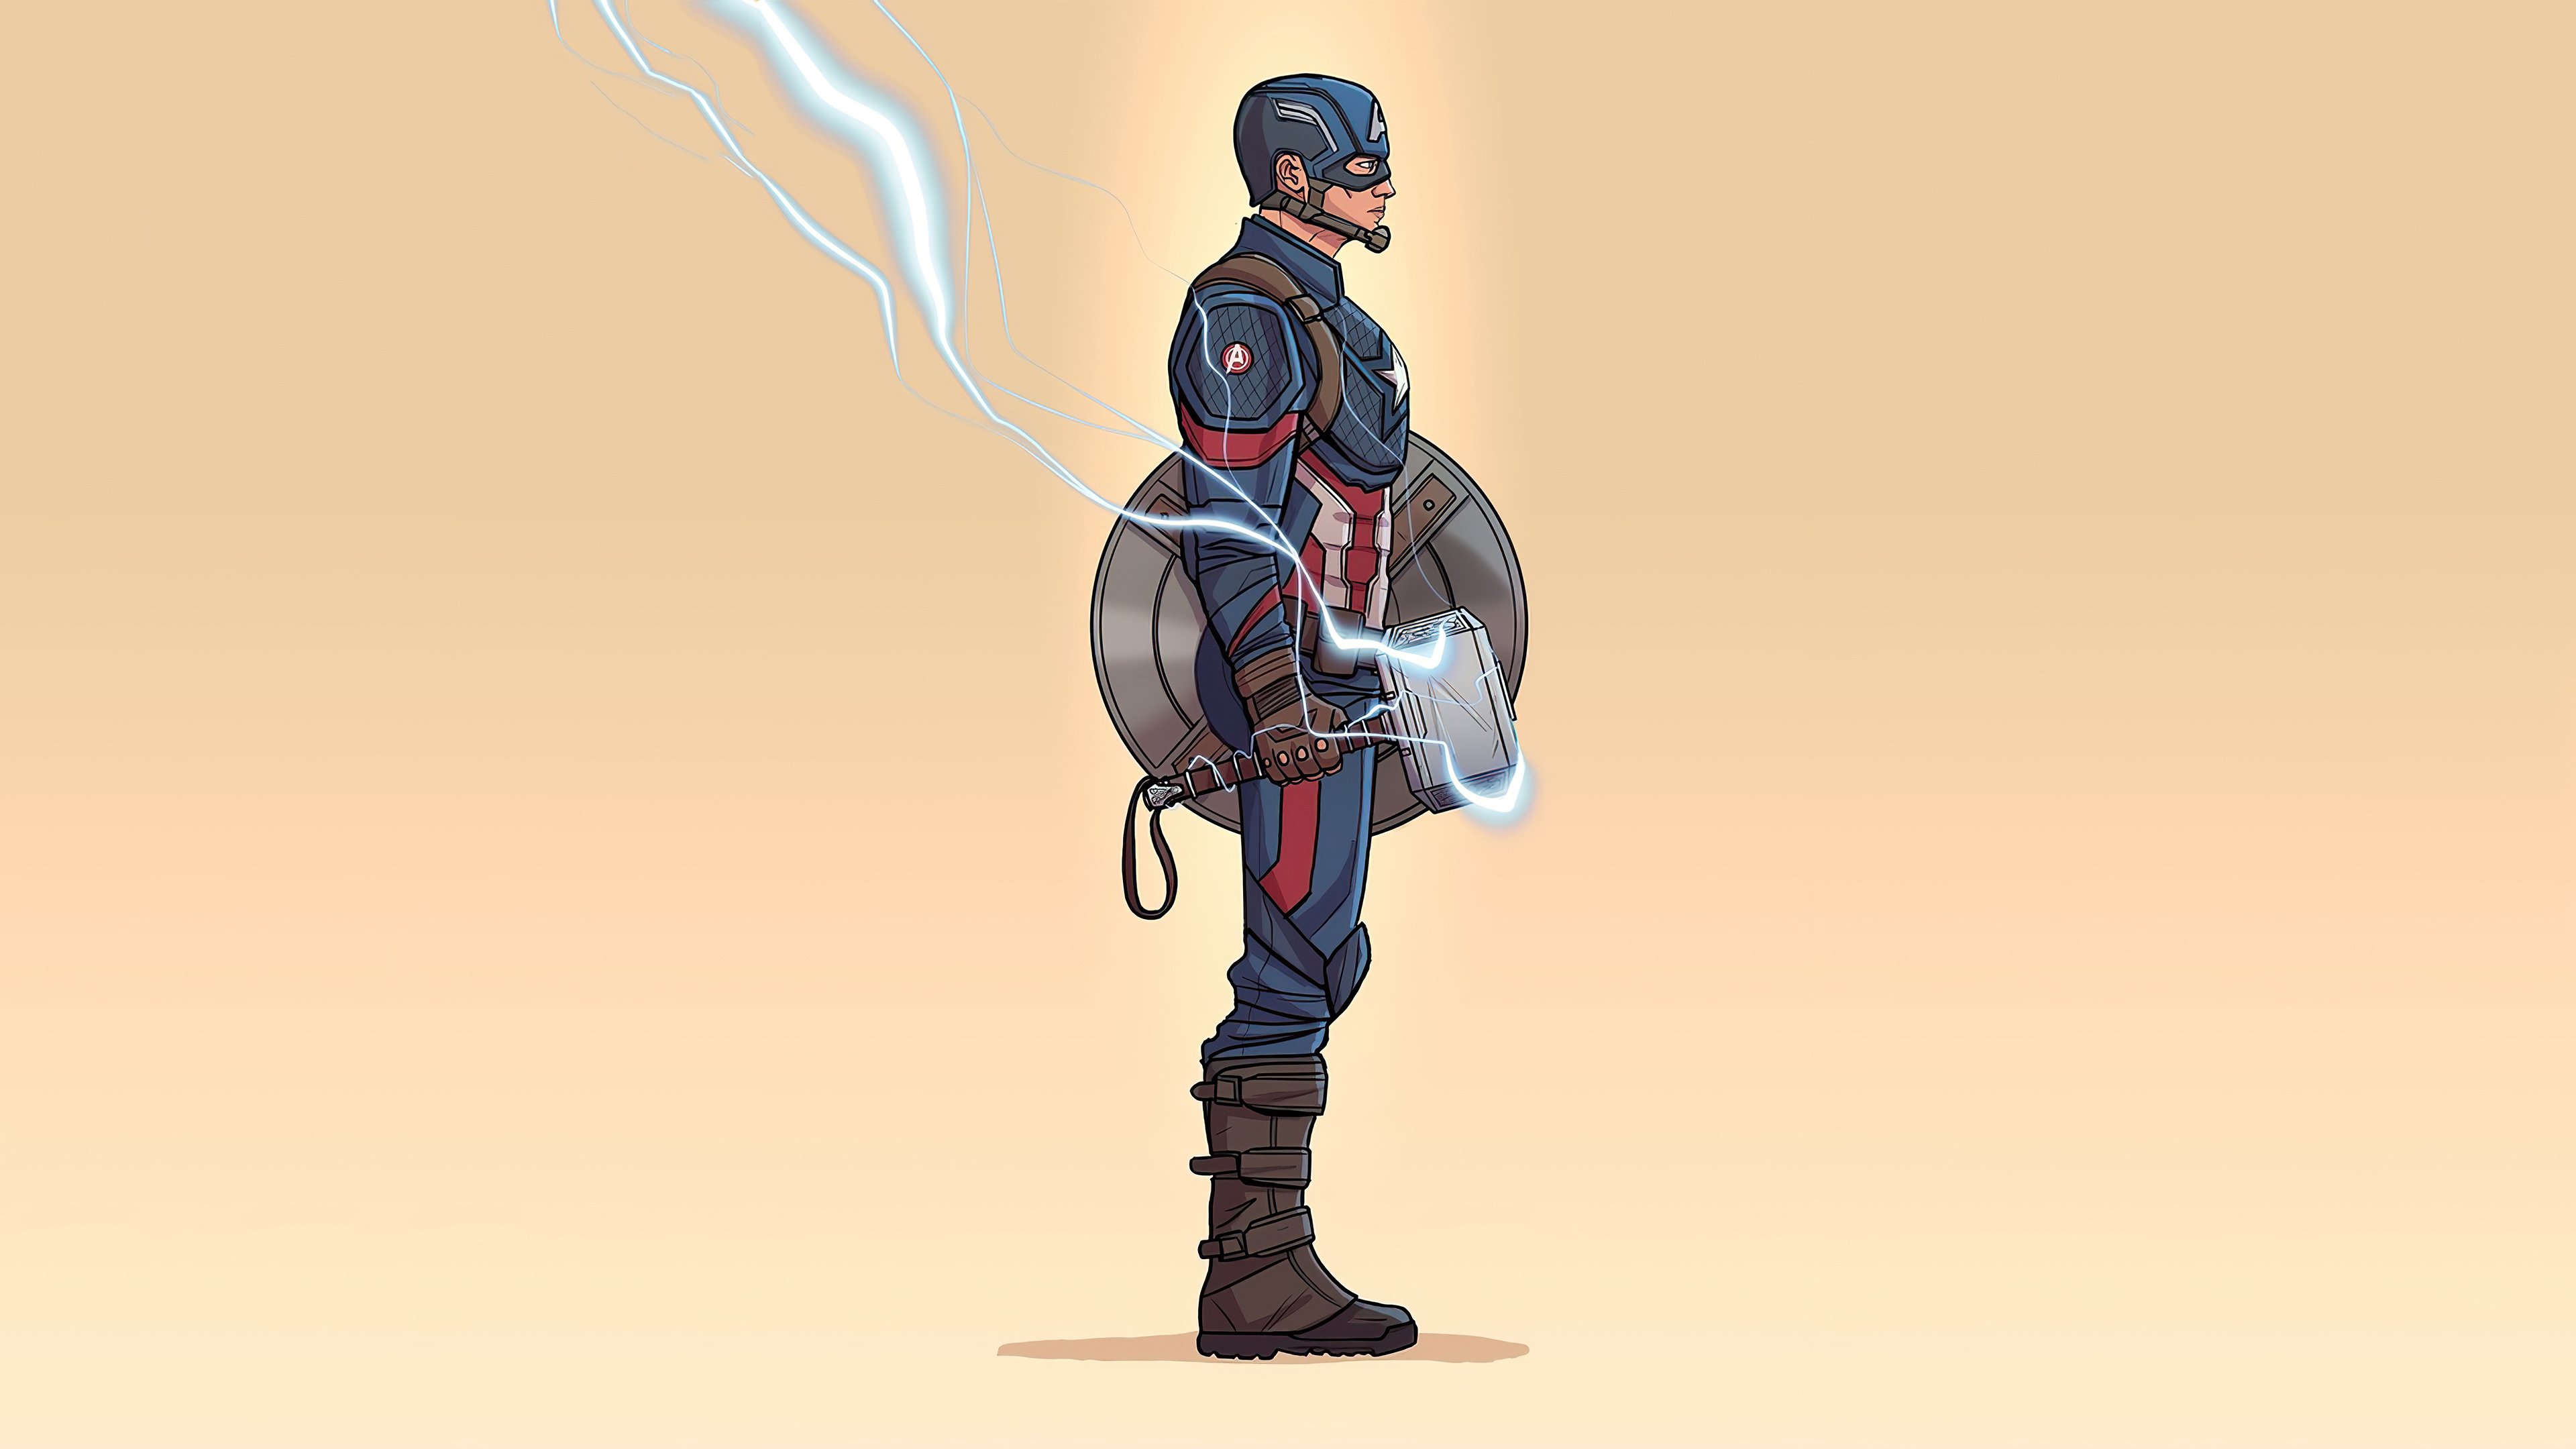 Wallpaper Minimalist Illustration of Captain America